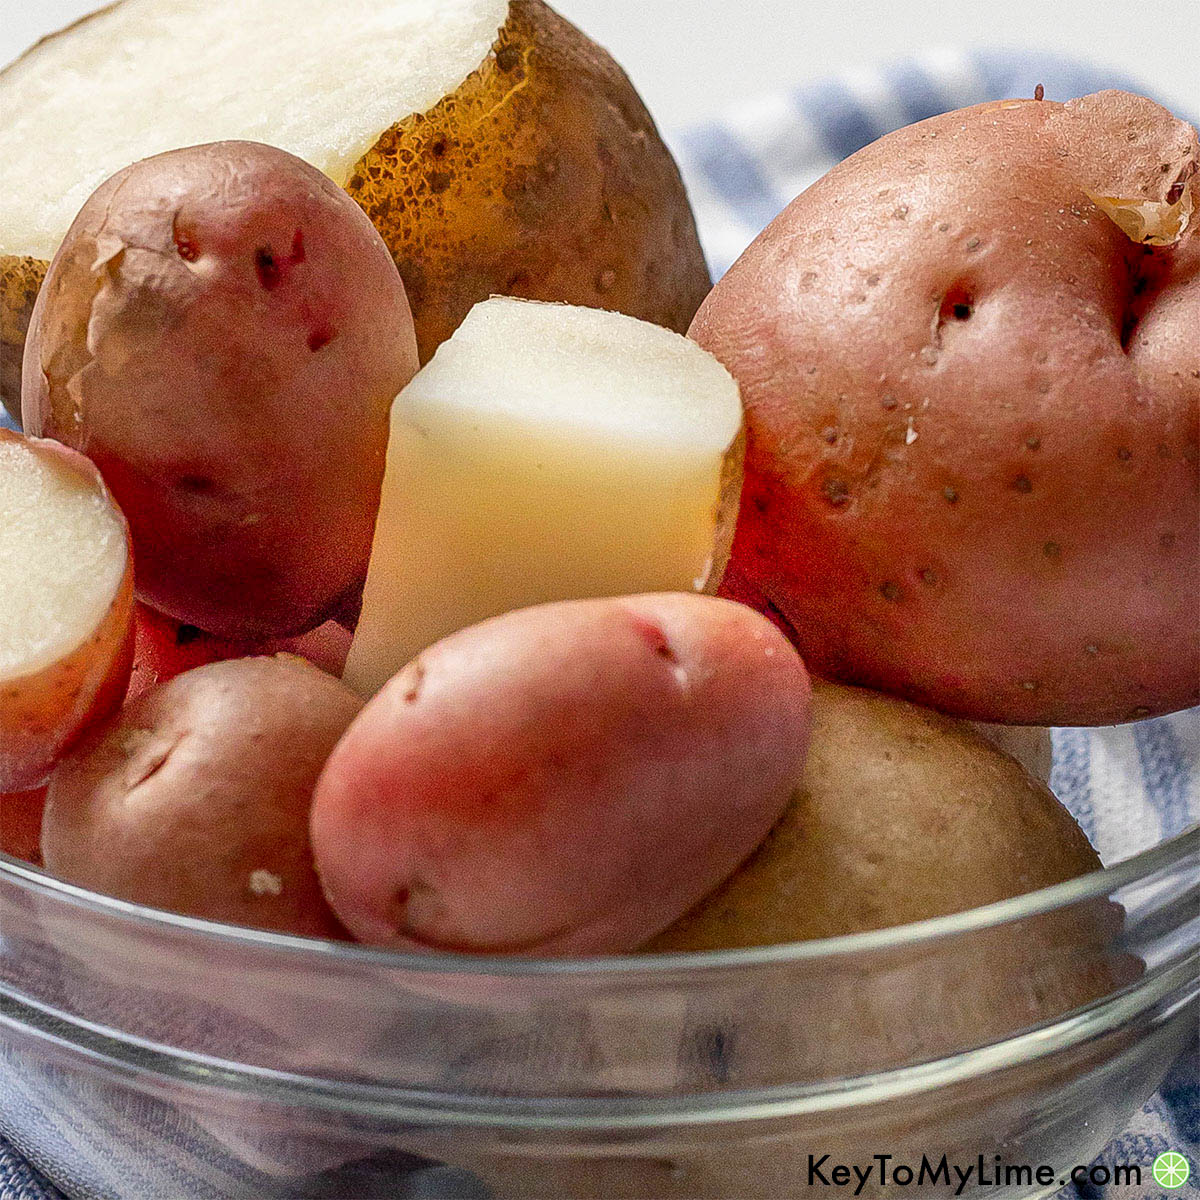 https://keytomylime.com/wp-content/uploads/2022/11/Best-How-to-Boil-Potatoes-Recipe.jpg